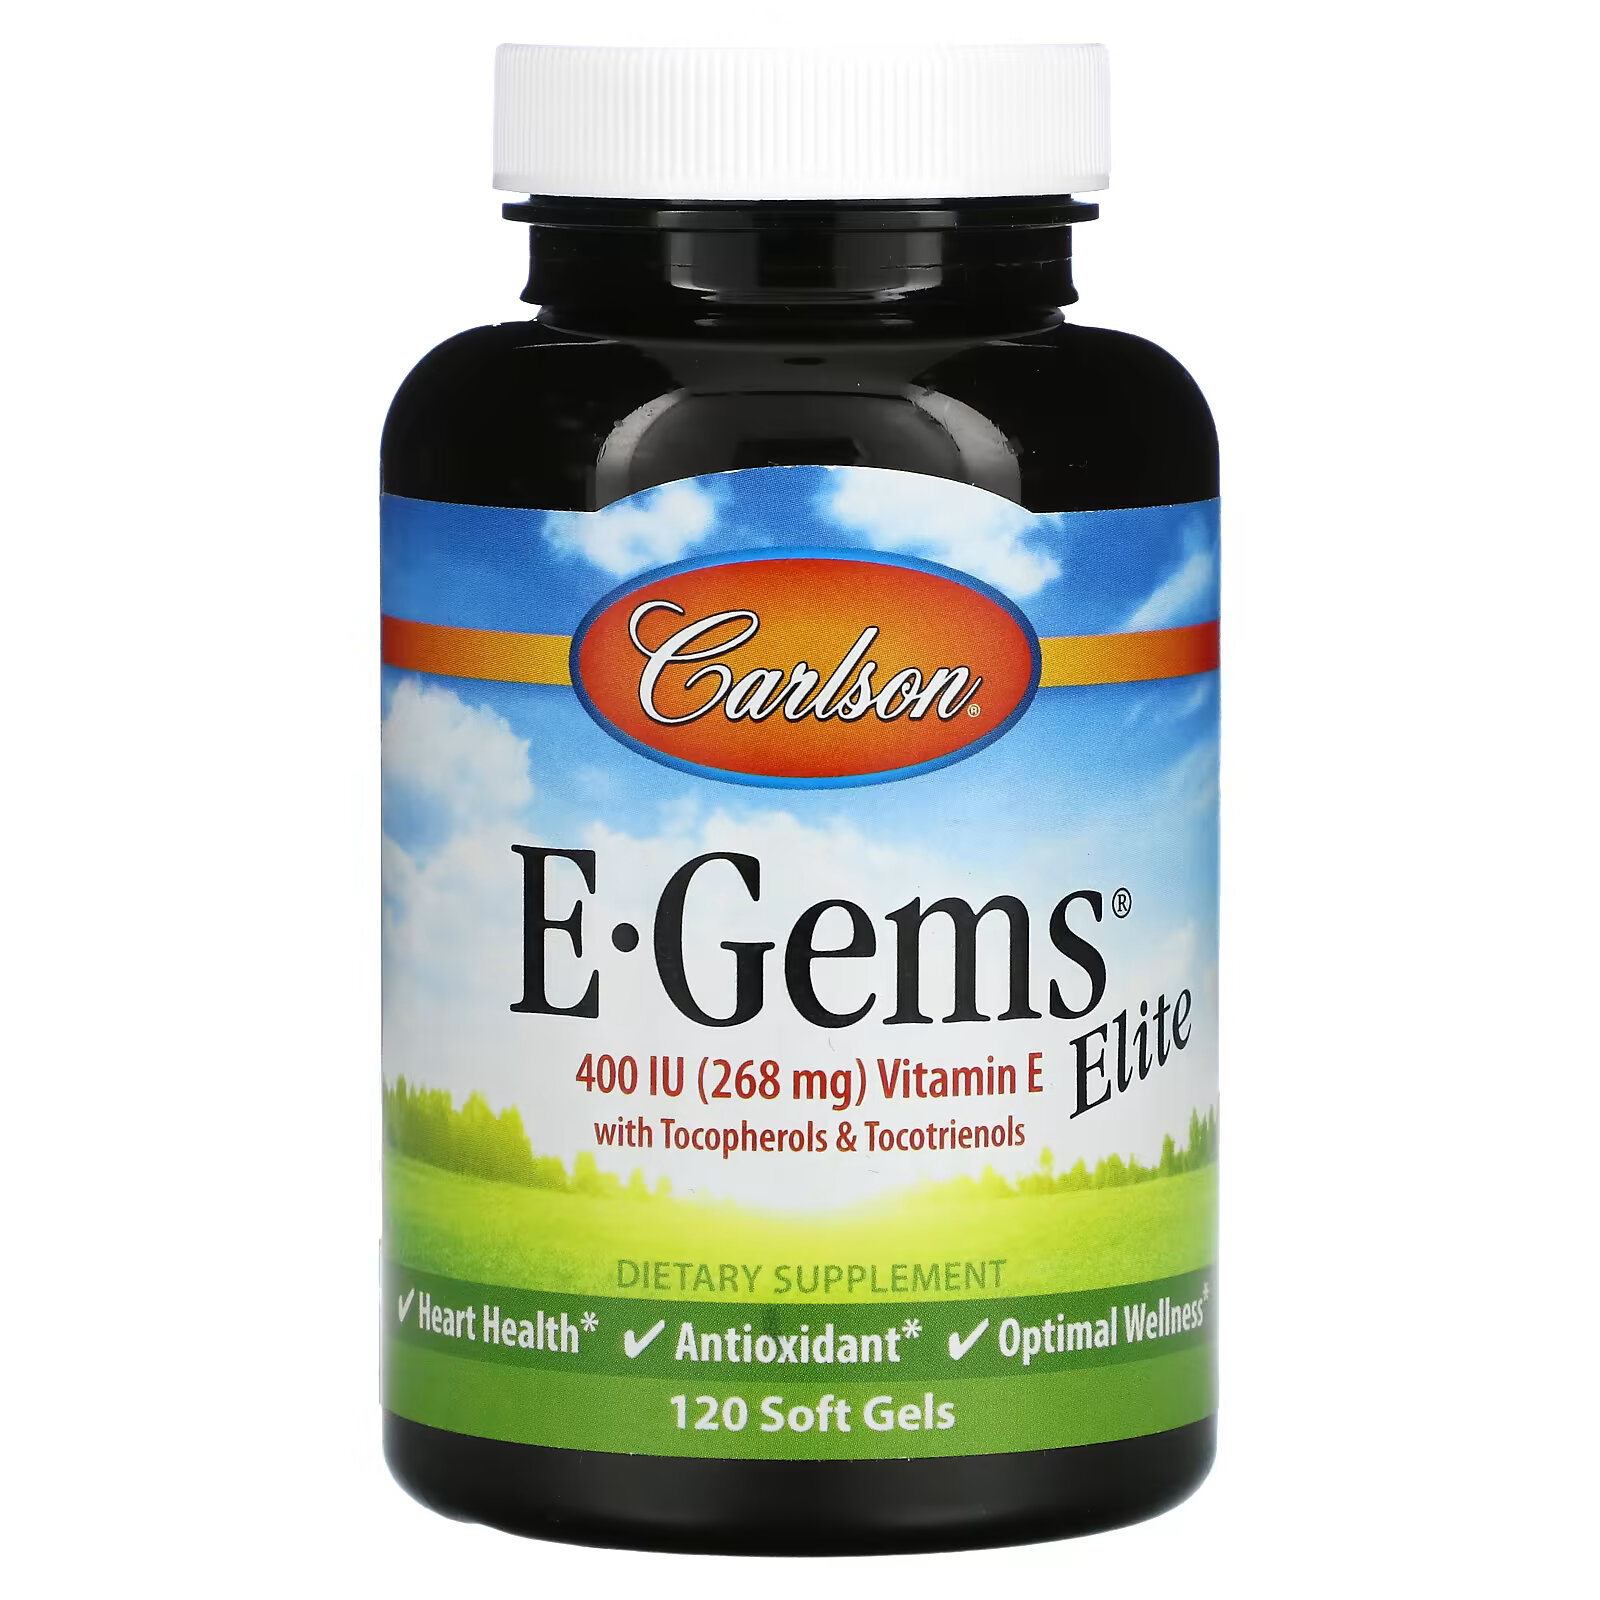 Carlson, E-Gems Elite, витамин E, 268 мг (400 МЕ), 120 мягких таблеток carlson elite epa gems 1000